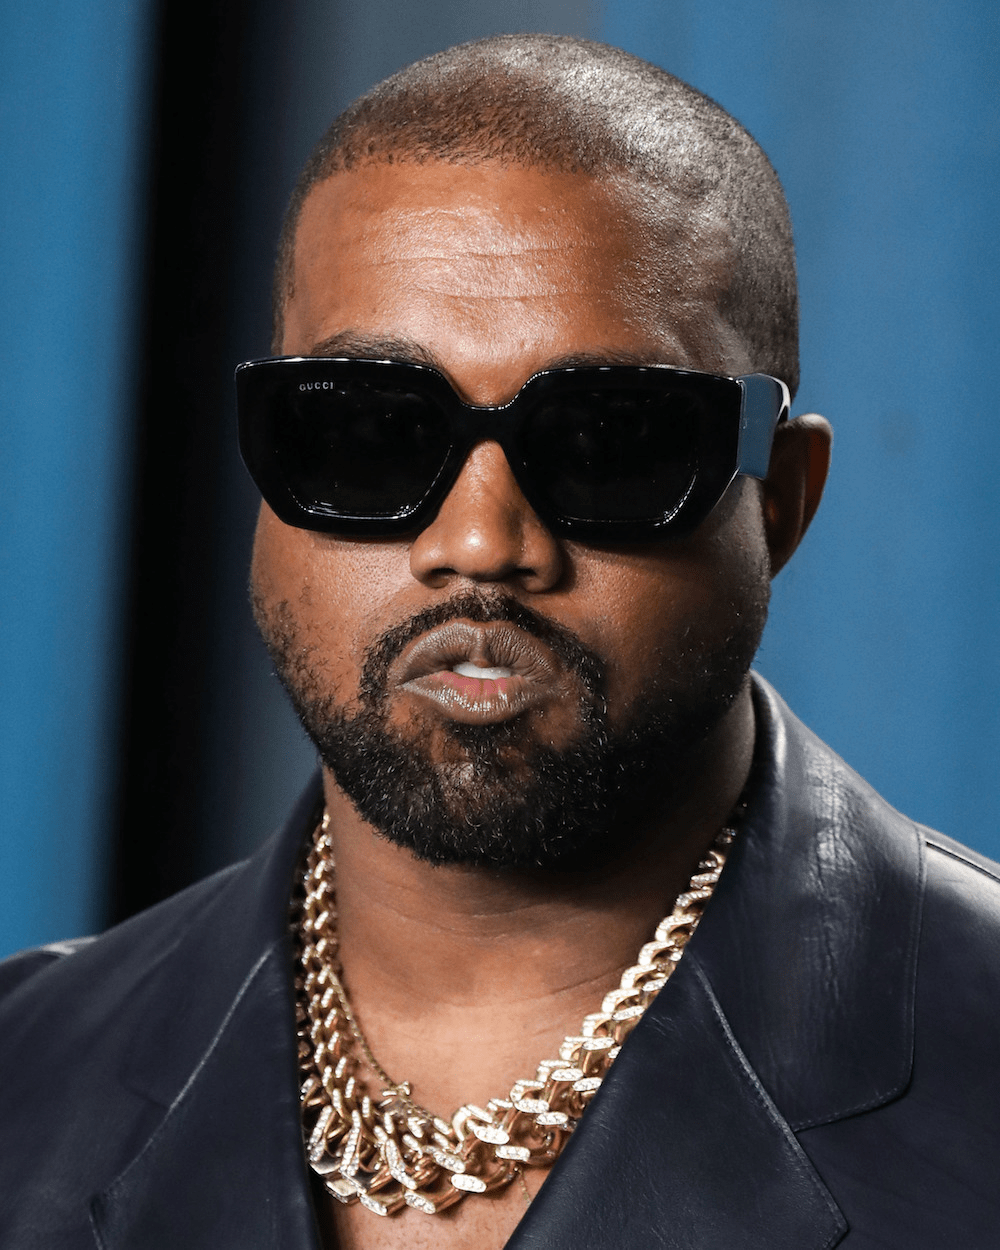 Kanye West/Parler deal could happen before january